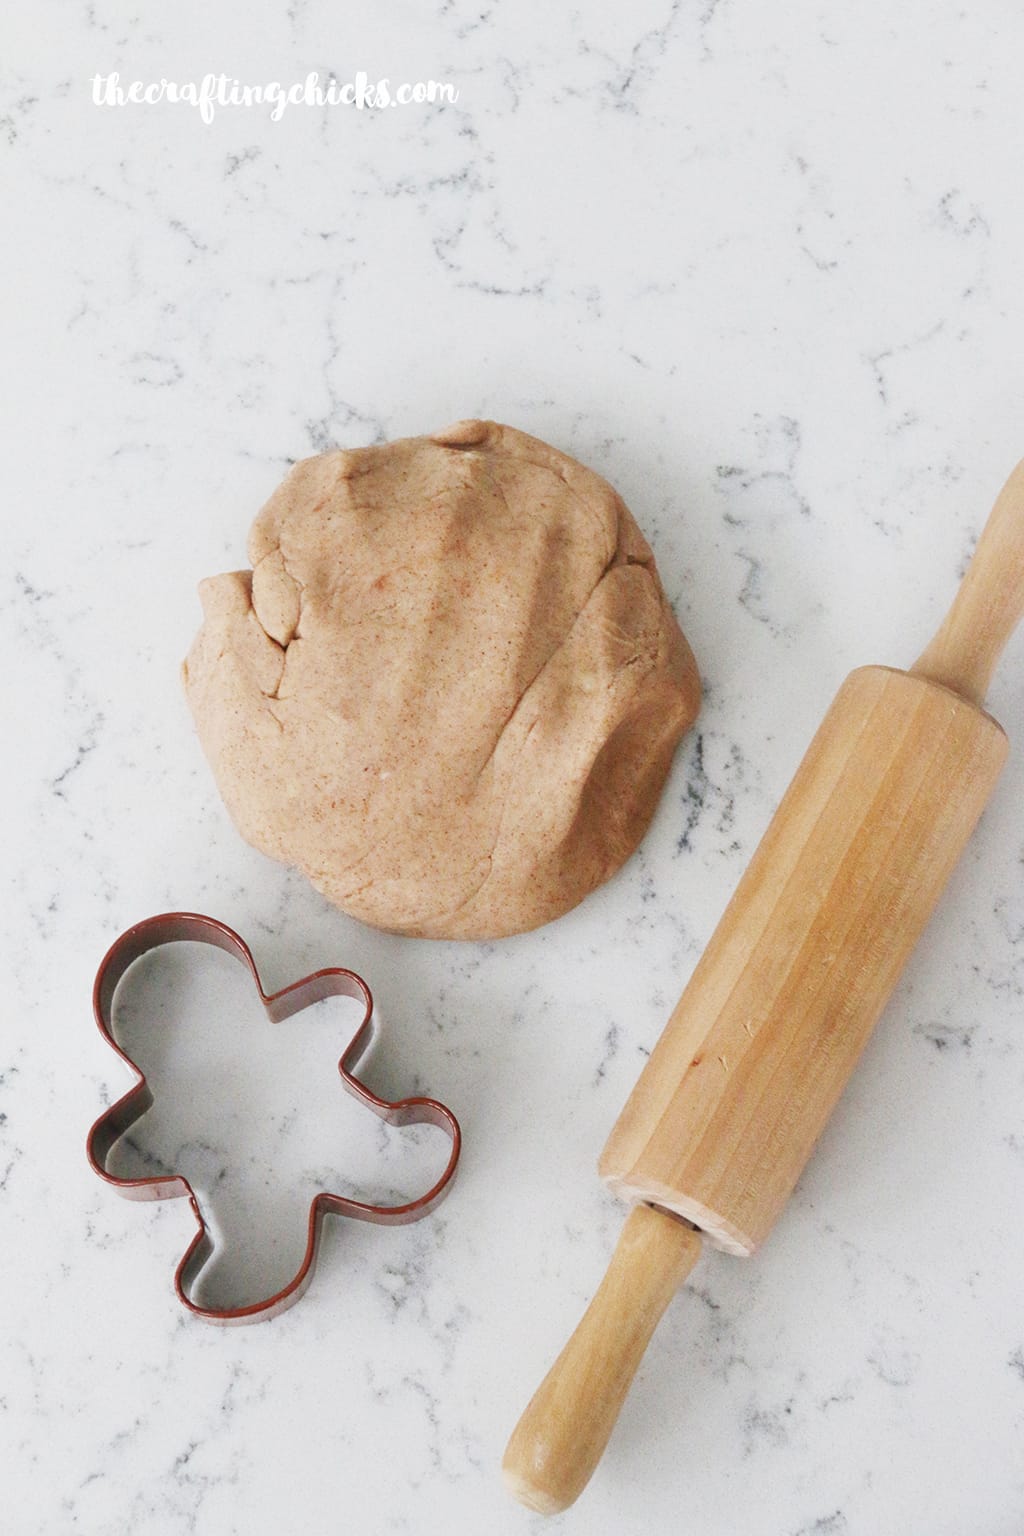 DIY Gingerbread Playdough - A simple gift idea - A fun kids activity